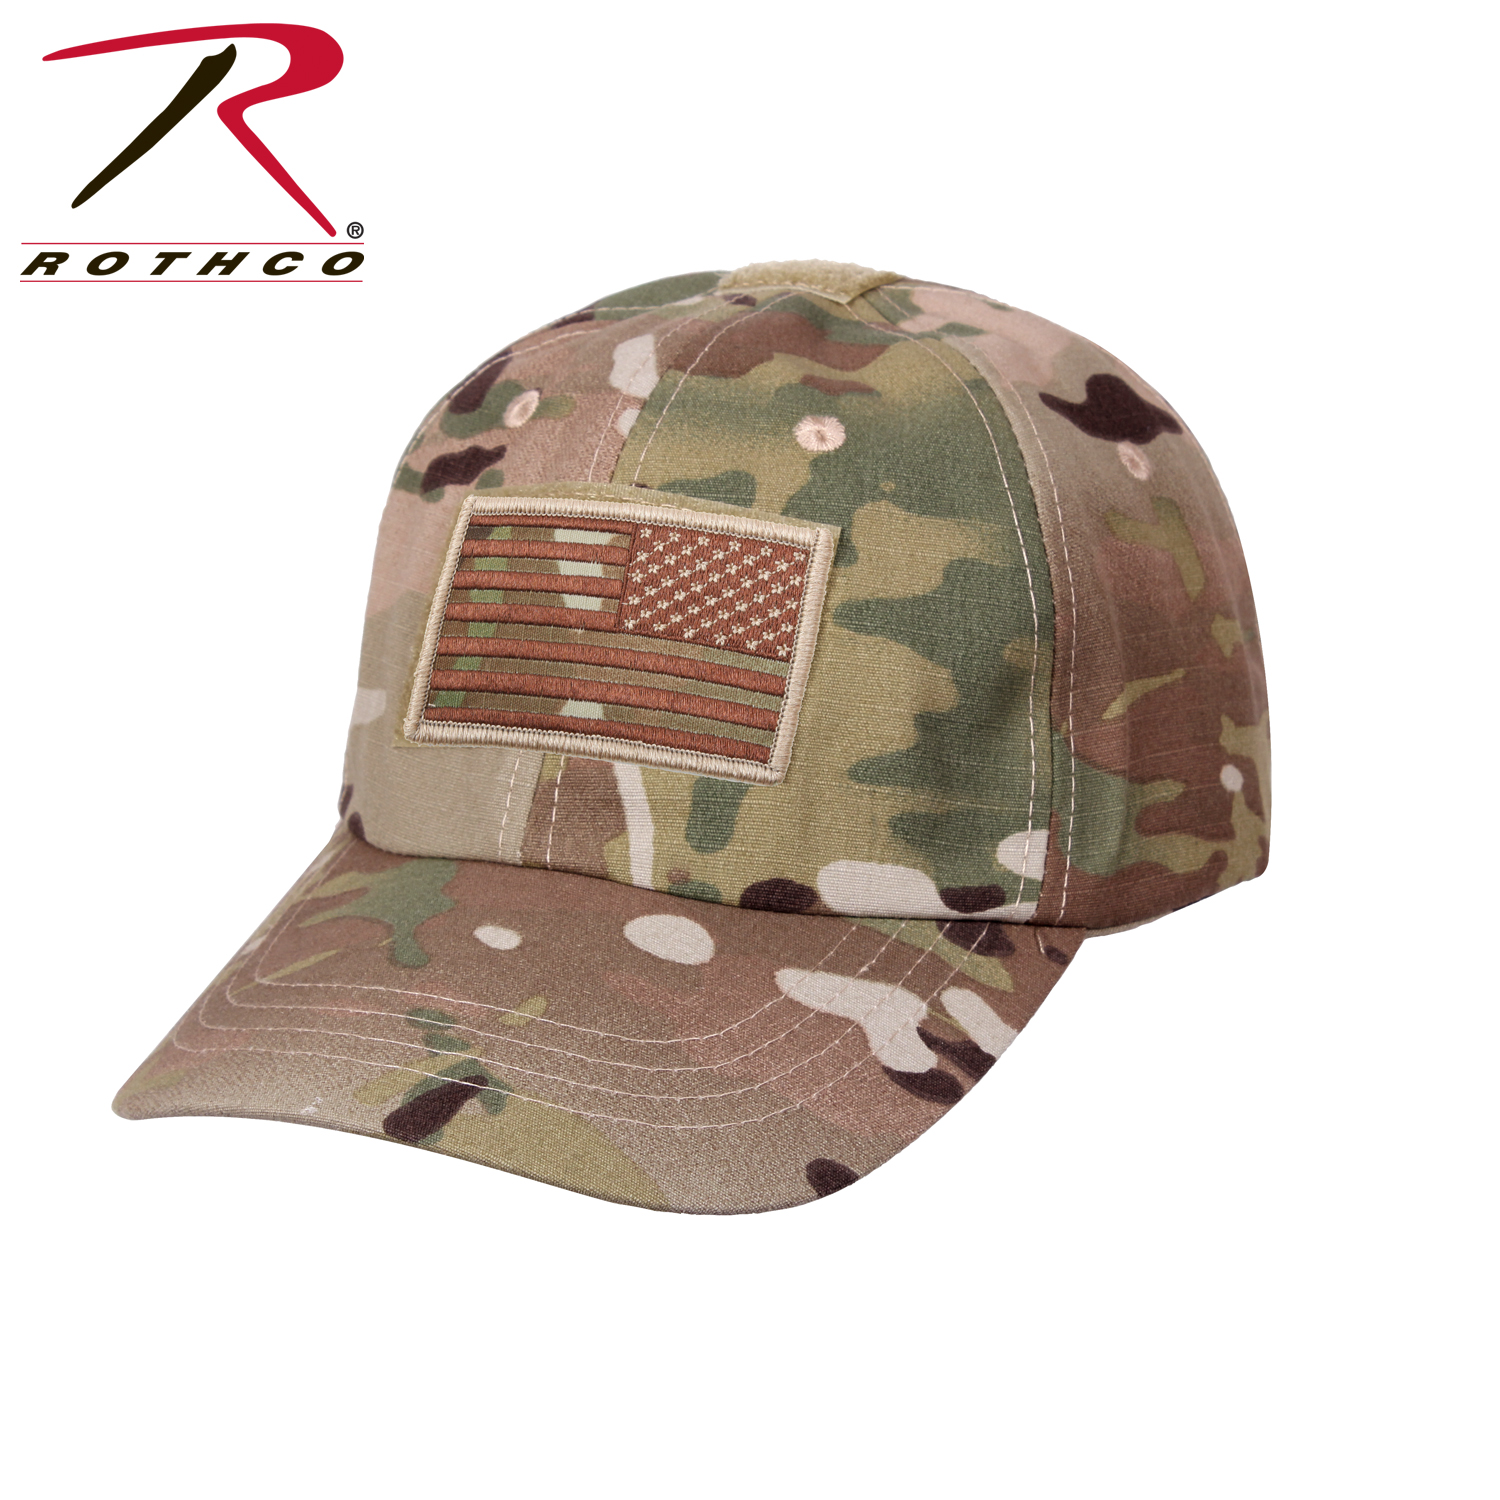  Rothco Kids ACU Digital Camo Baseball Cap: Military